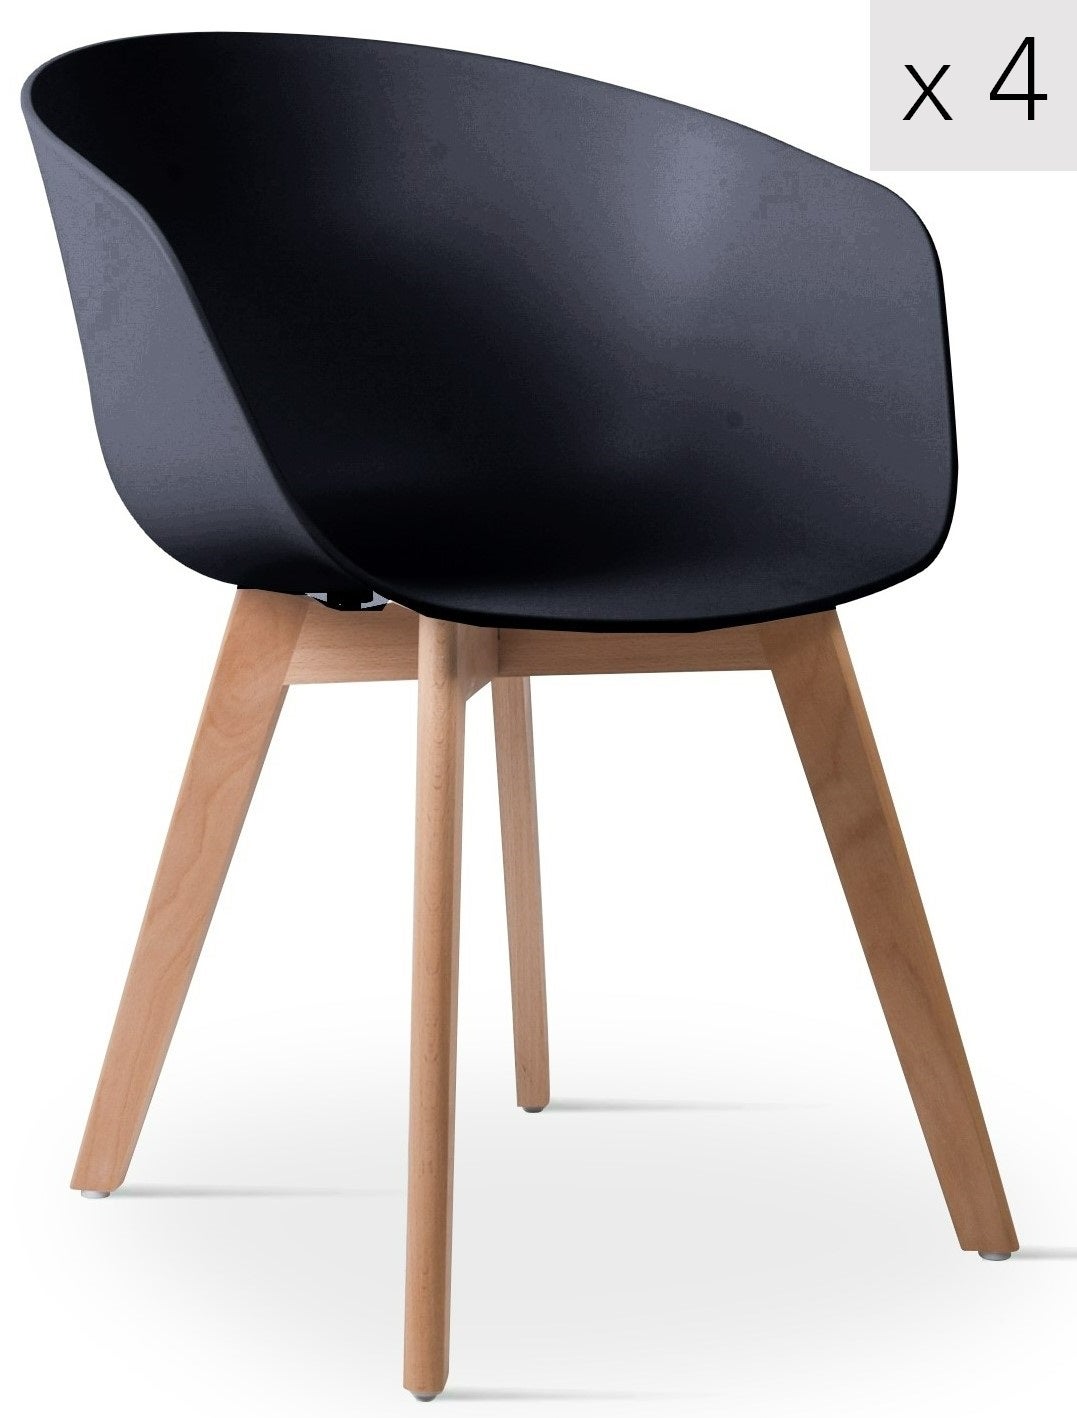 Nordlys - Set 4 sedie scandinave con gambe in legno nere